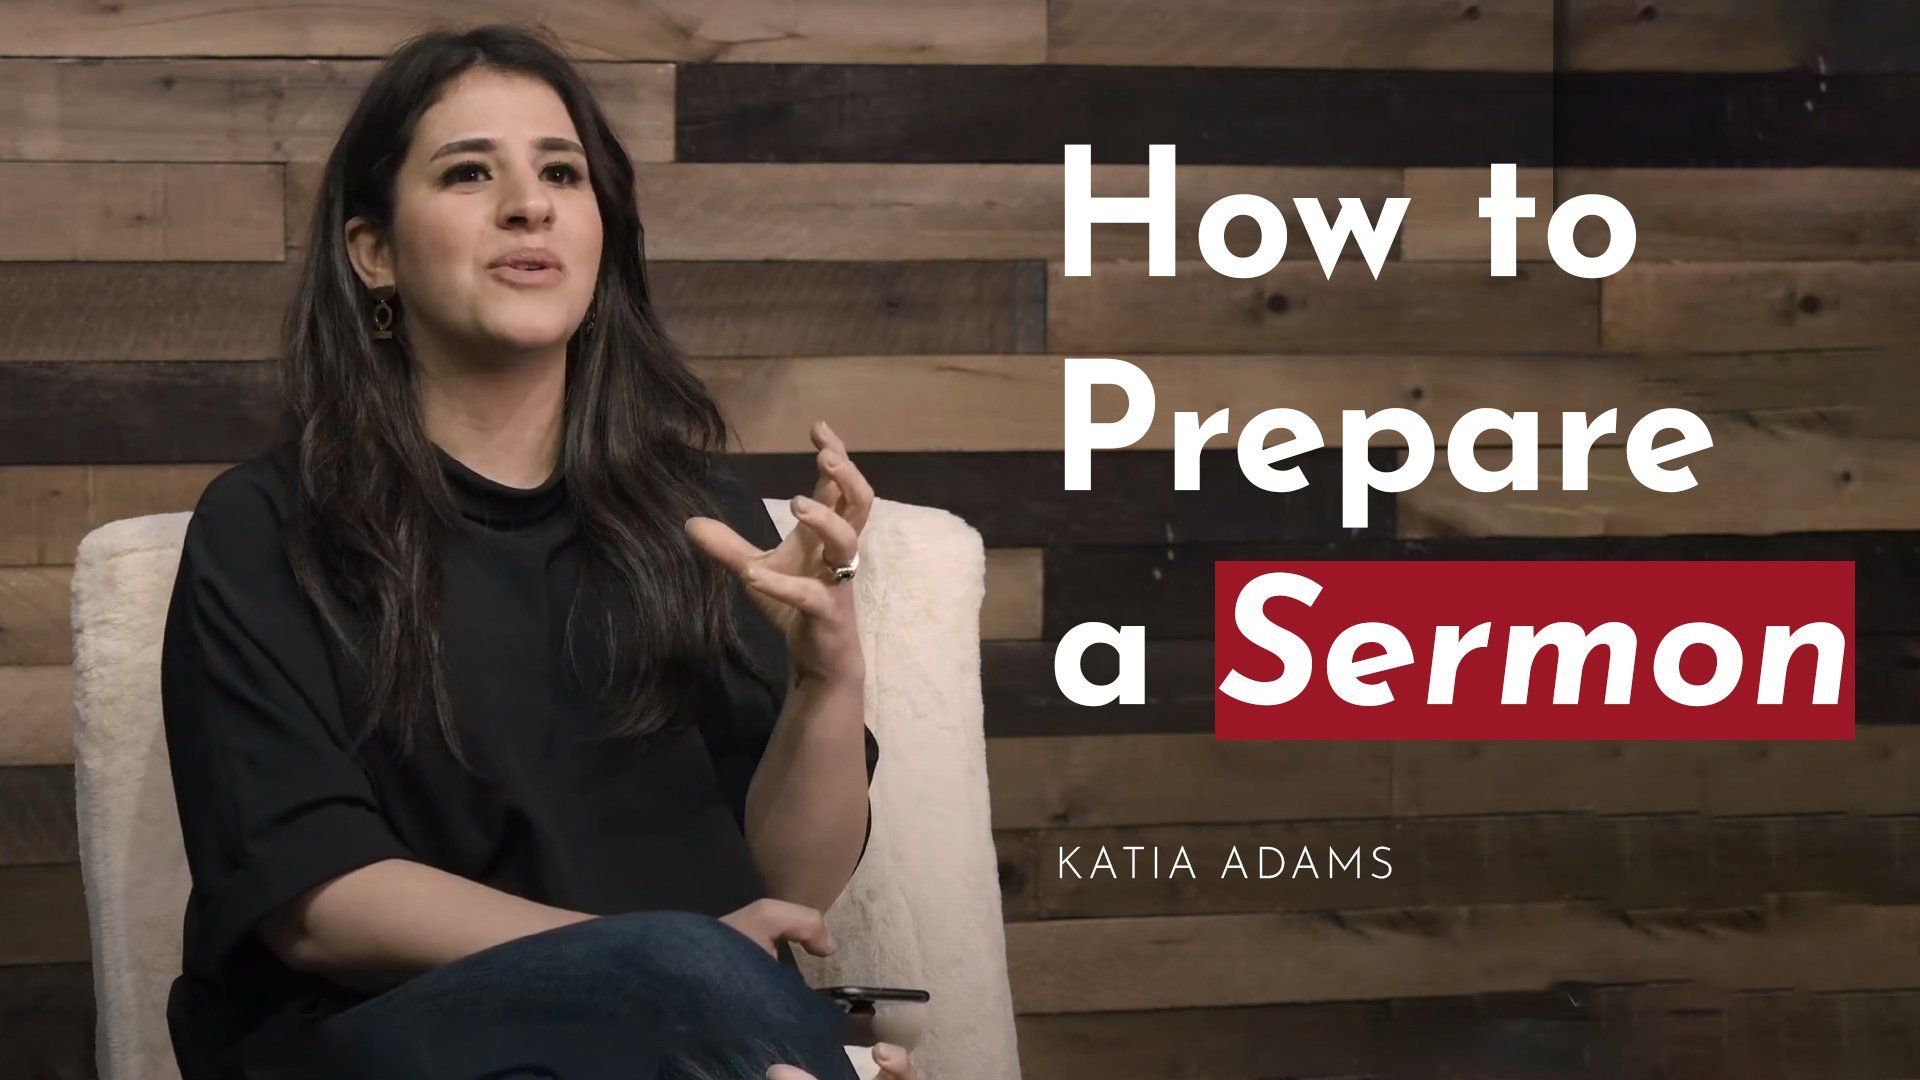 Katia Adams talks about her 3 keys on how to prepare a sermon.